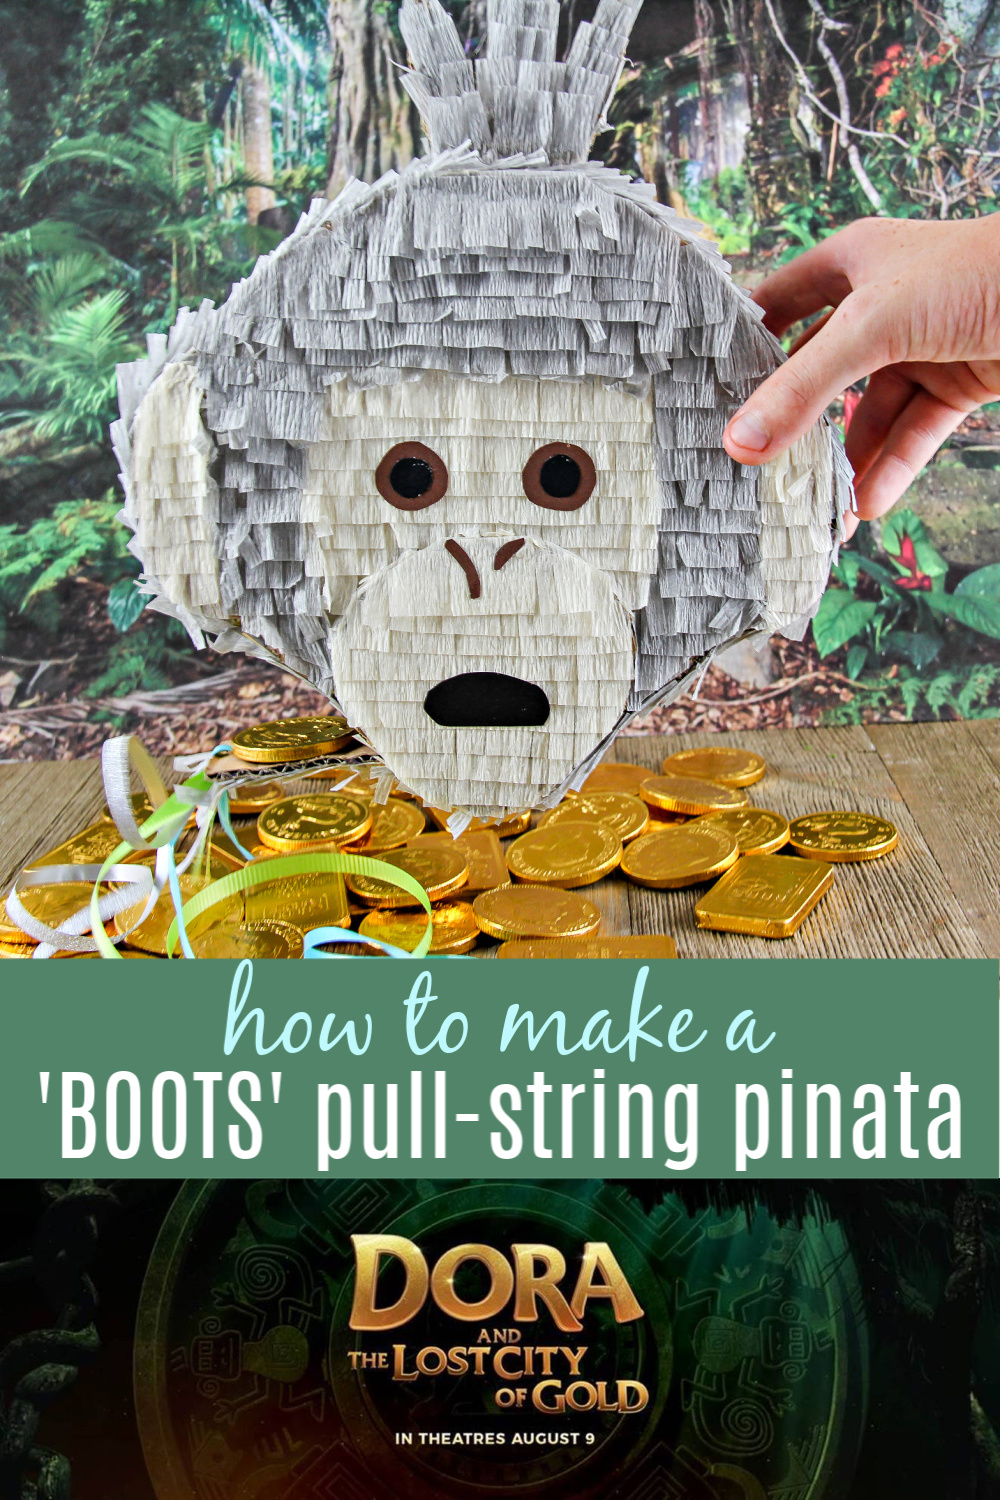 Dora birthday party monkey pinata inspired by Boots Pinterest image